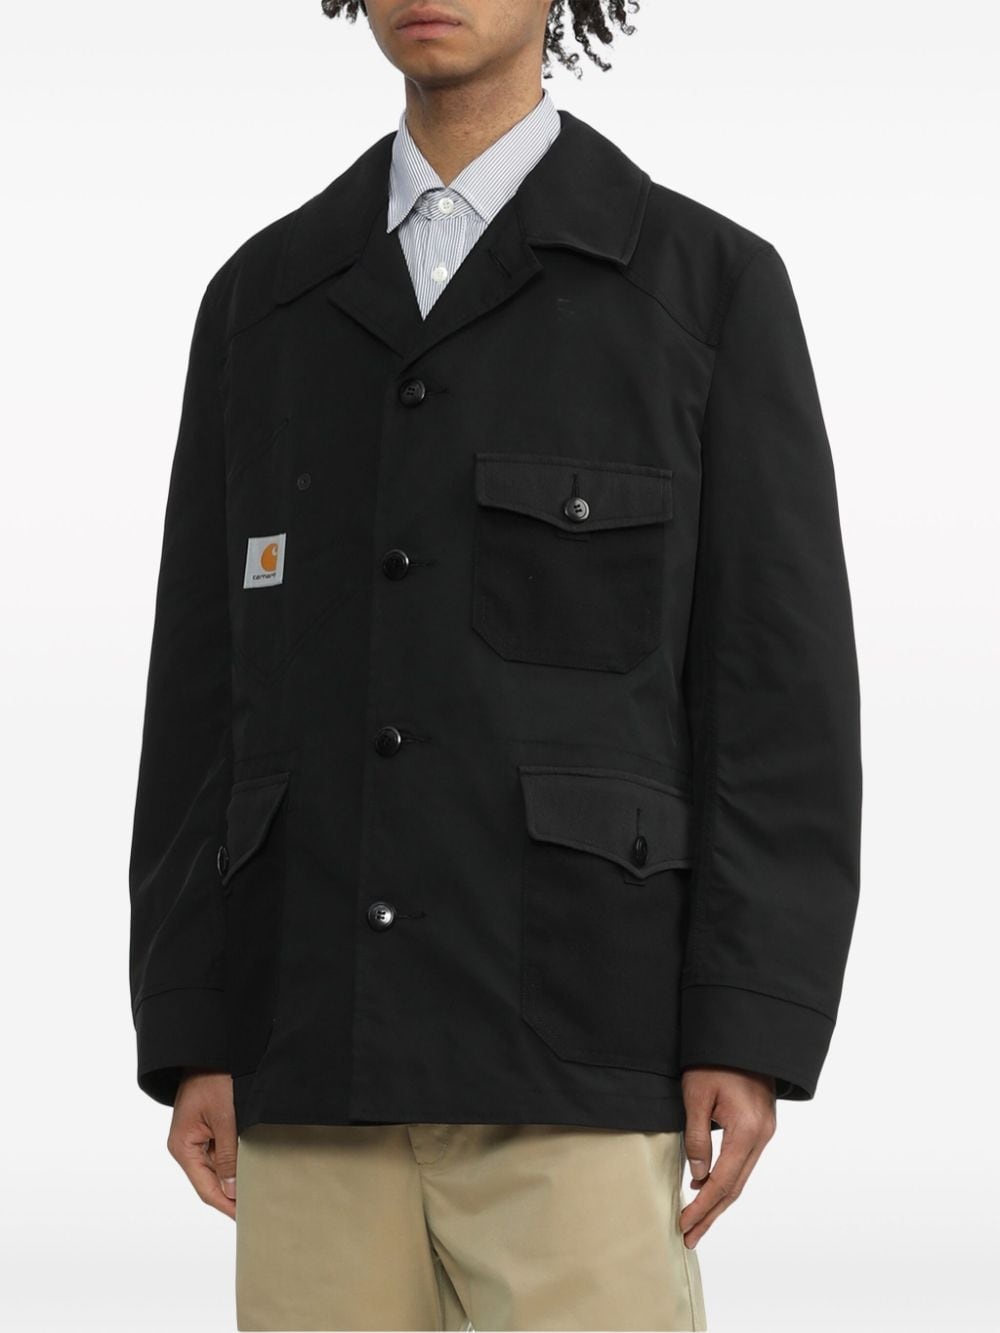 x Carhartt chore jacket - 3